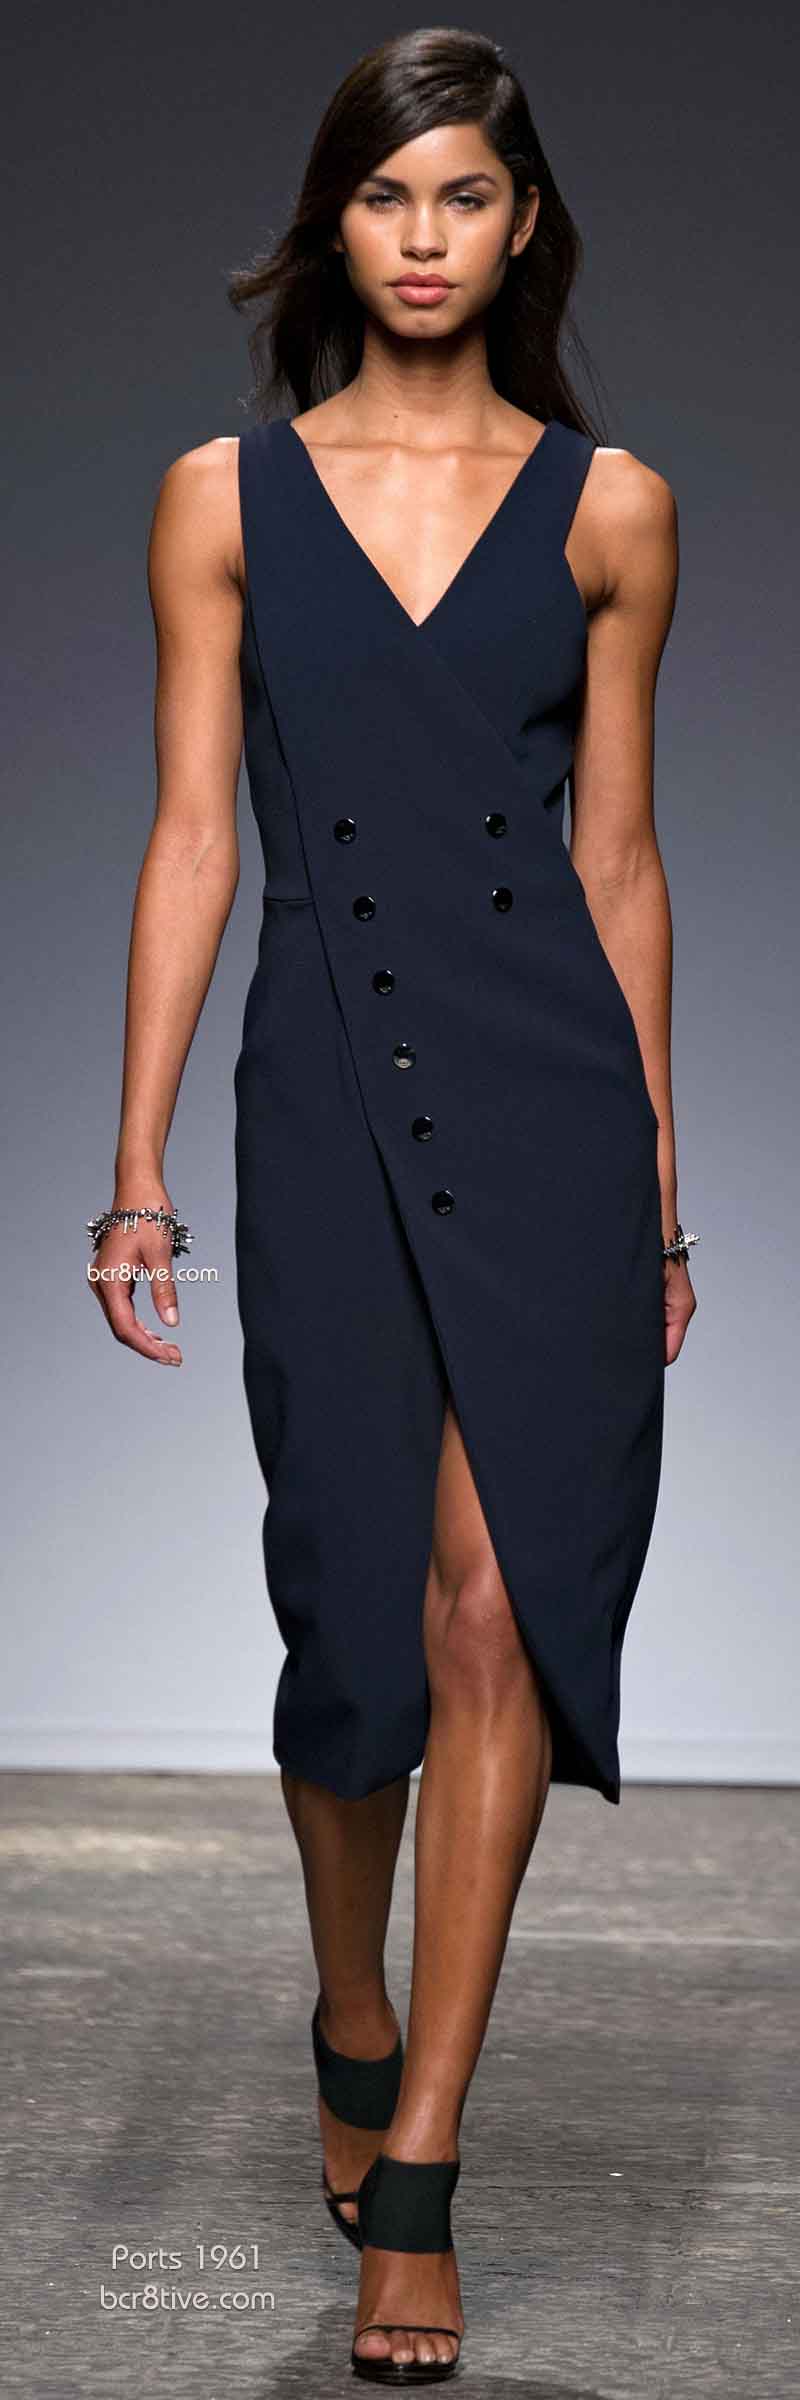 Fall 2014 Menswear Inspired Fashion - Ports 1961